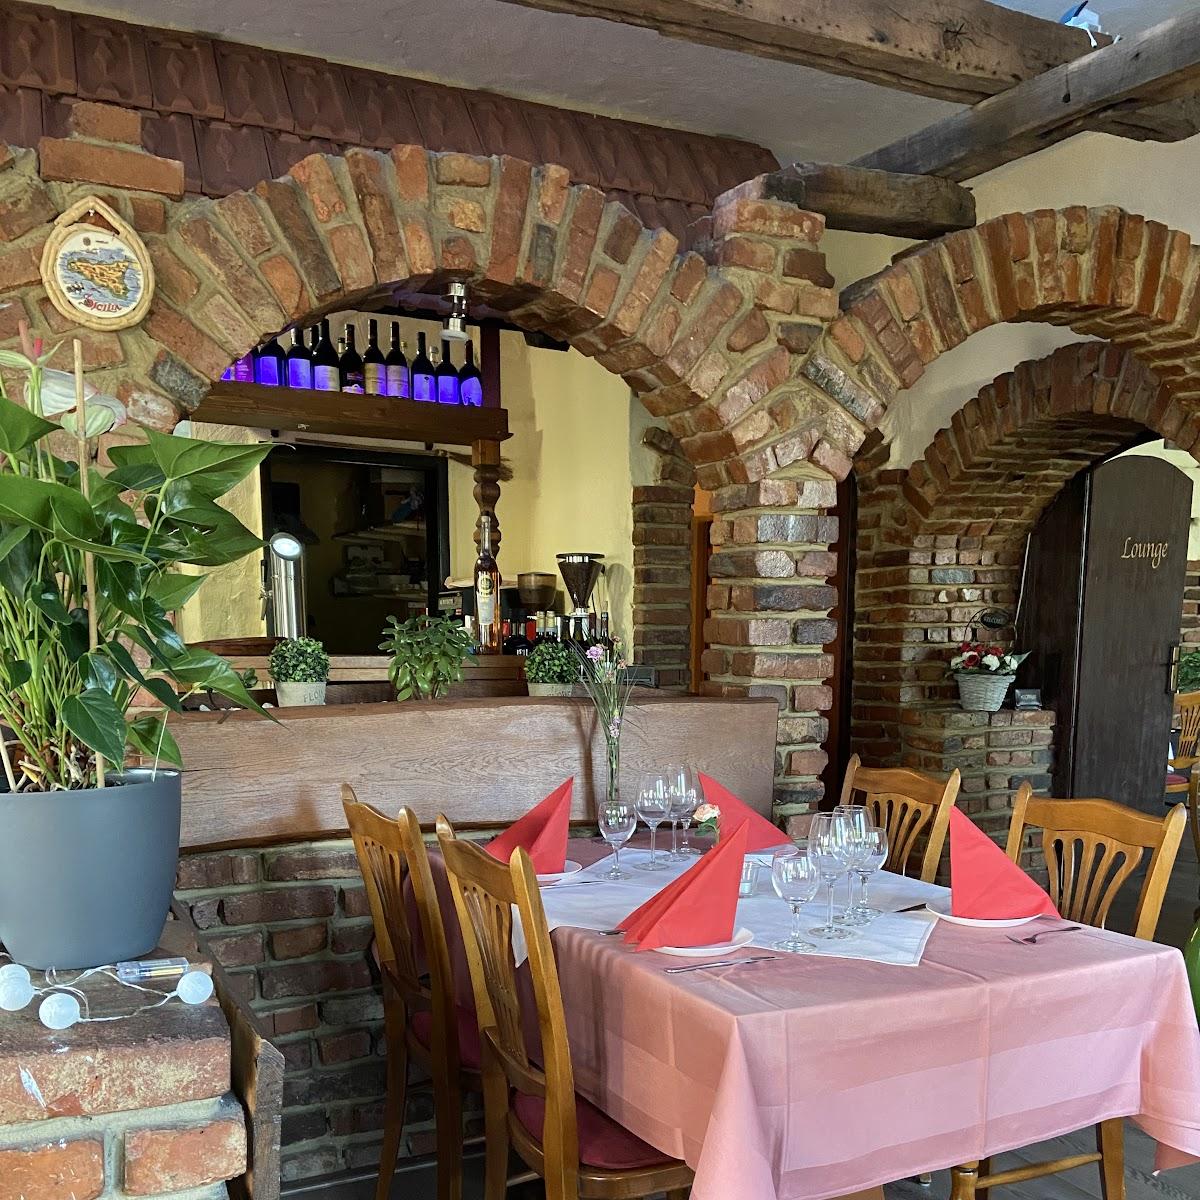 Restaurant "Toscana" in Saarlouis